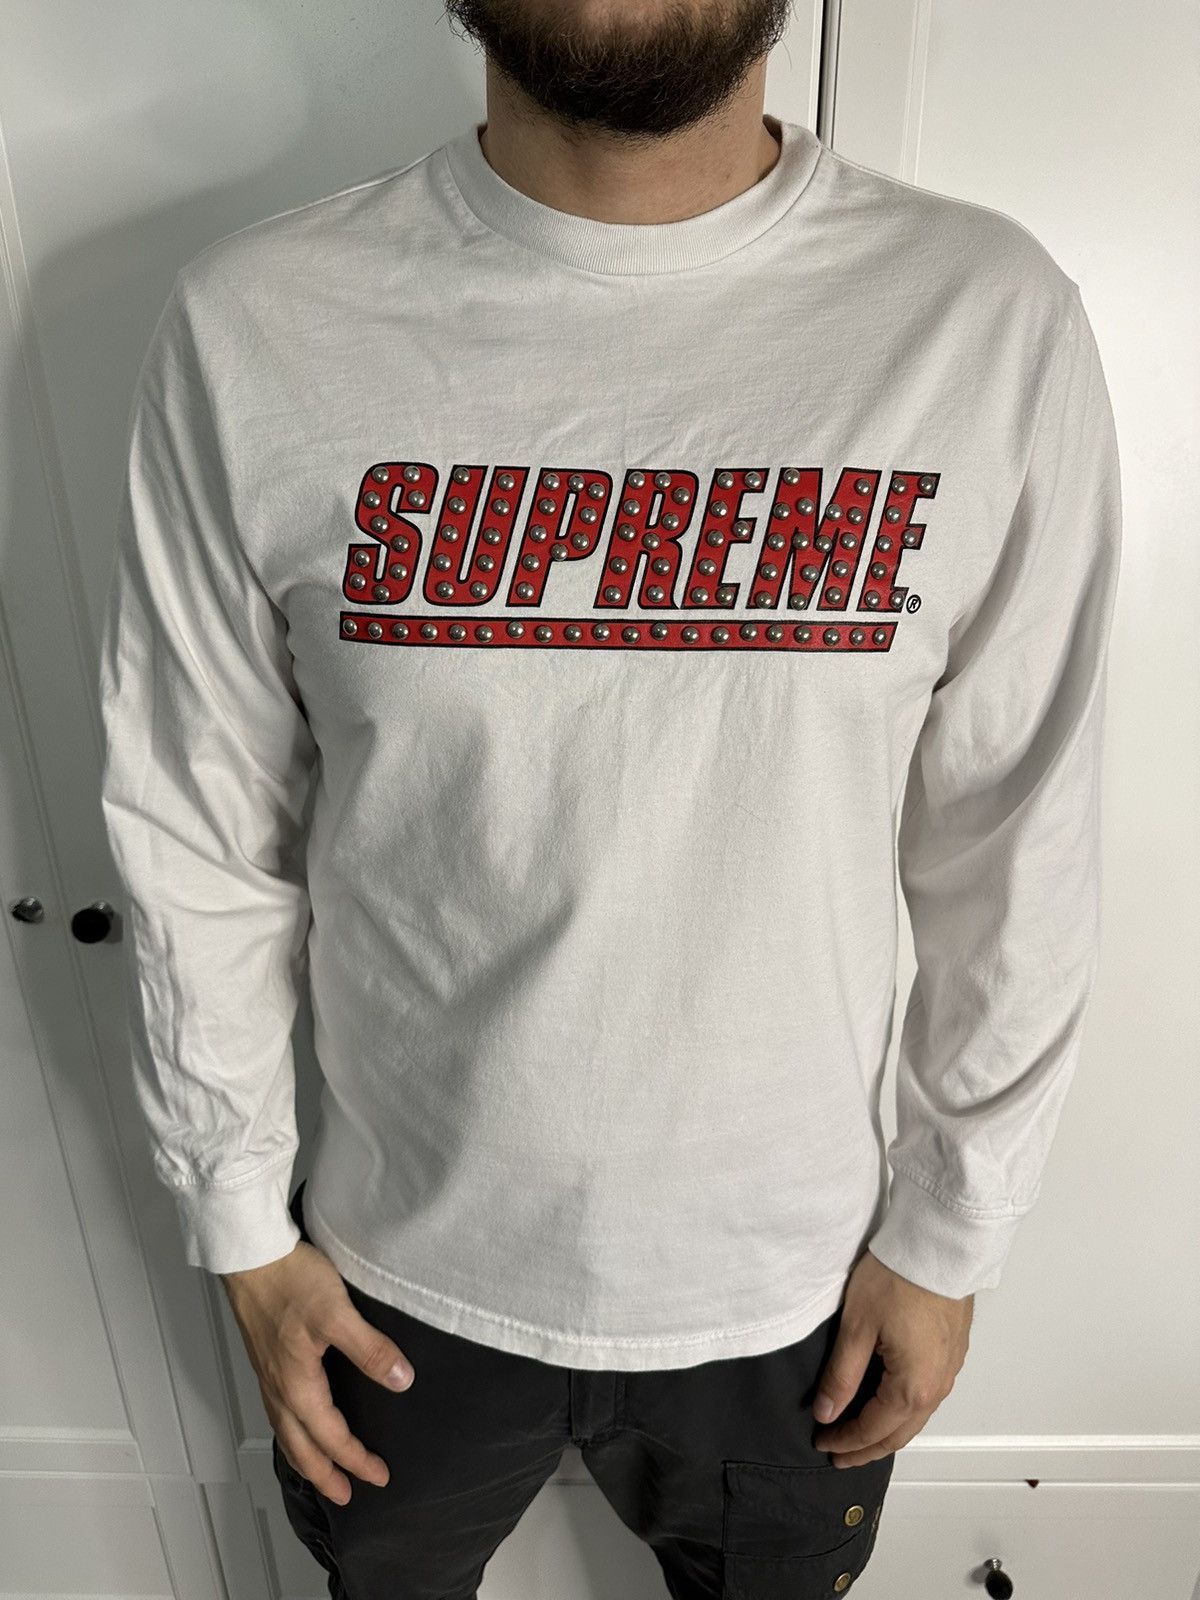 Supreme Supreme Studded White Logo Long Sleeve Tee Shirt Size Small |  Grailed